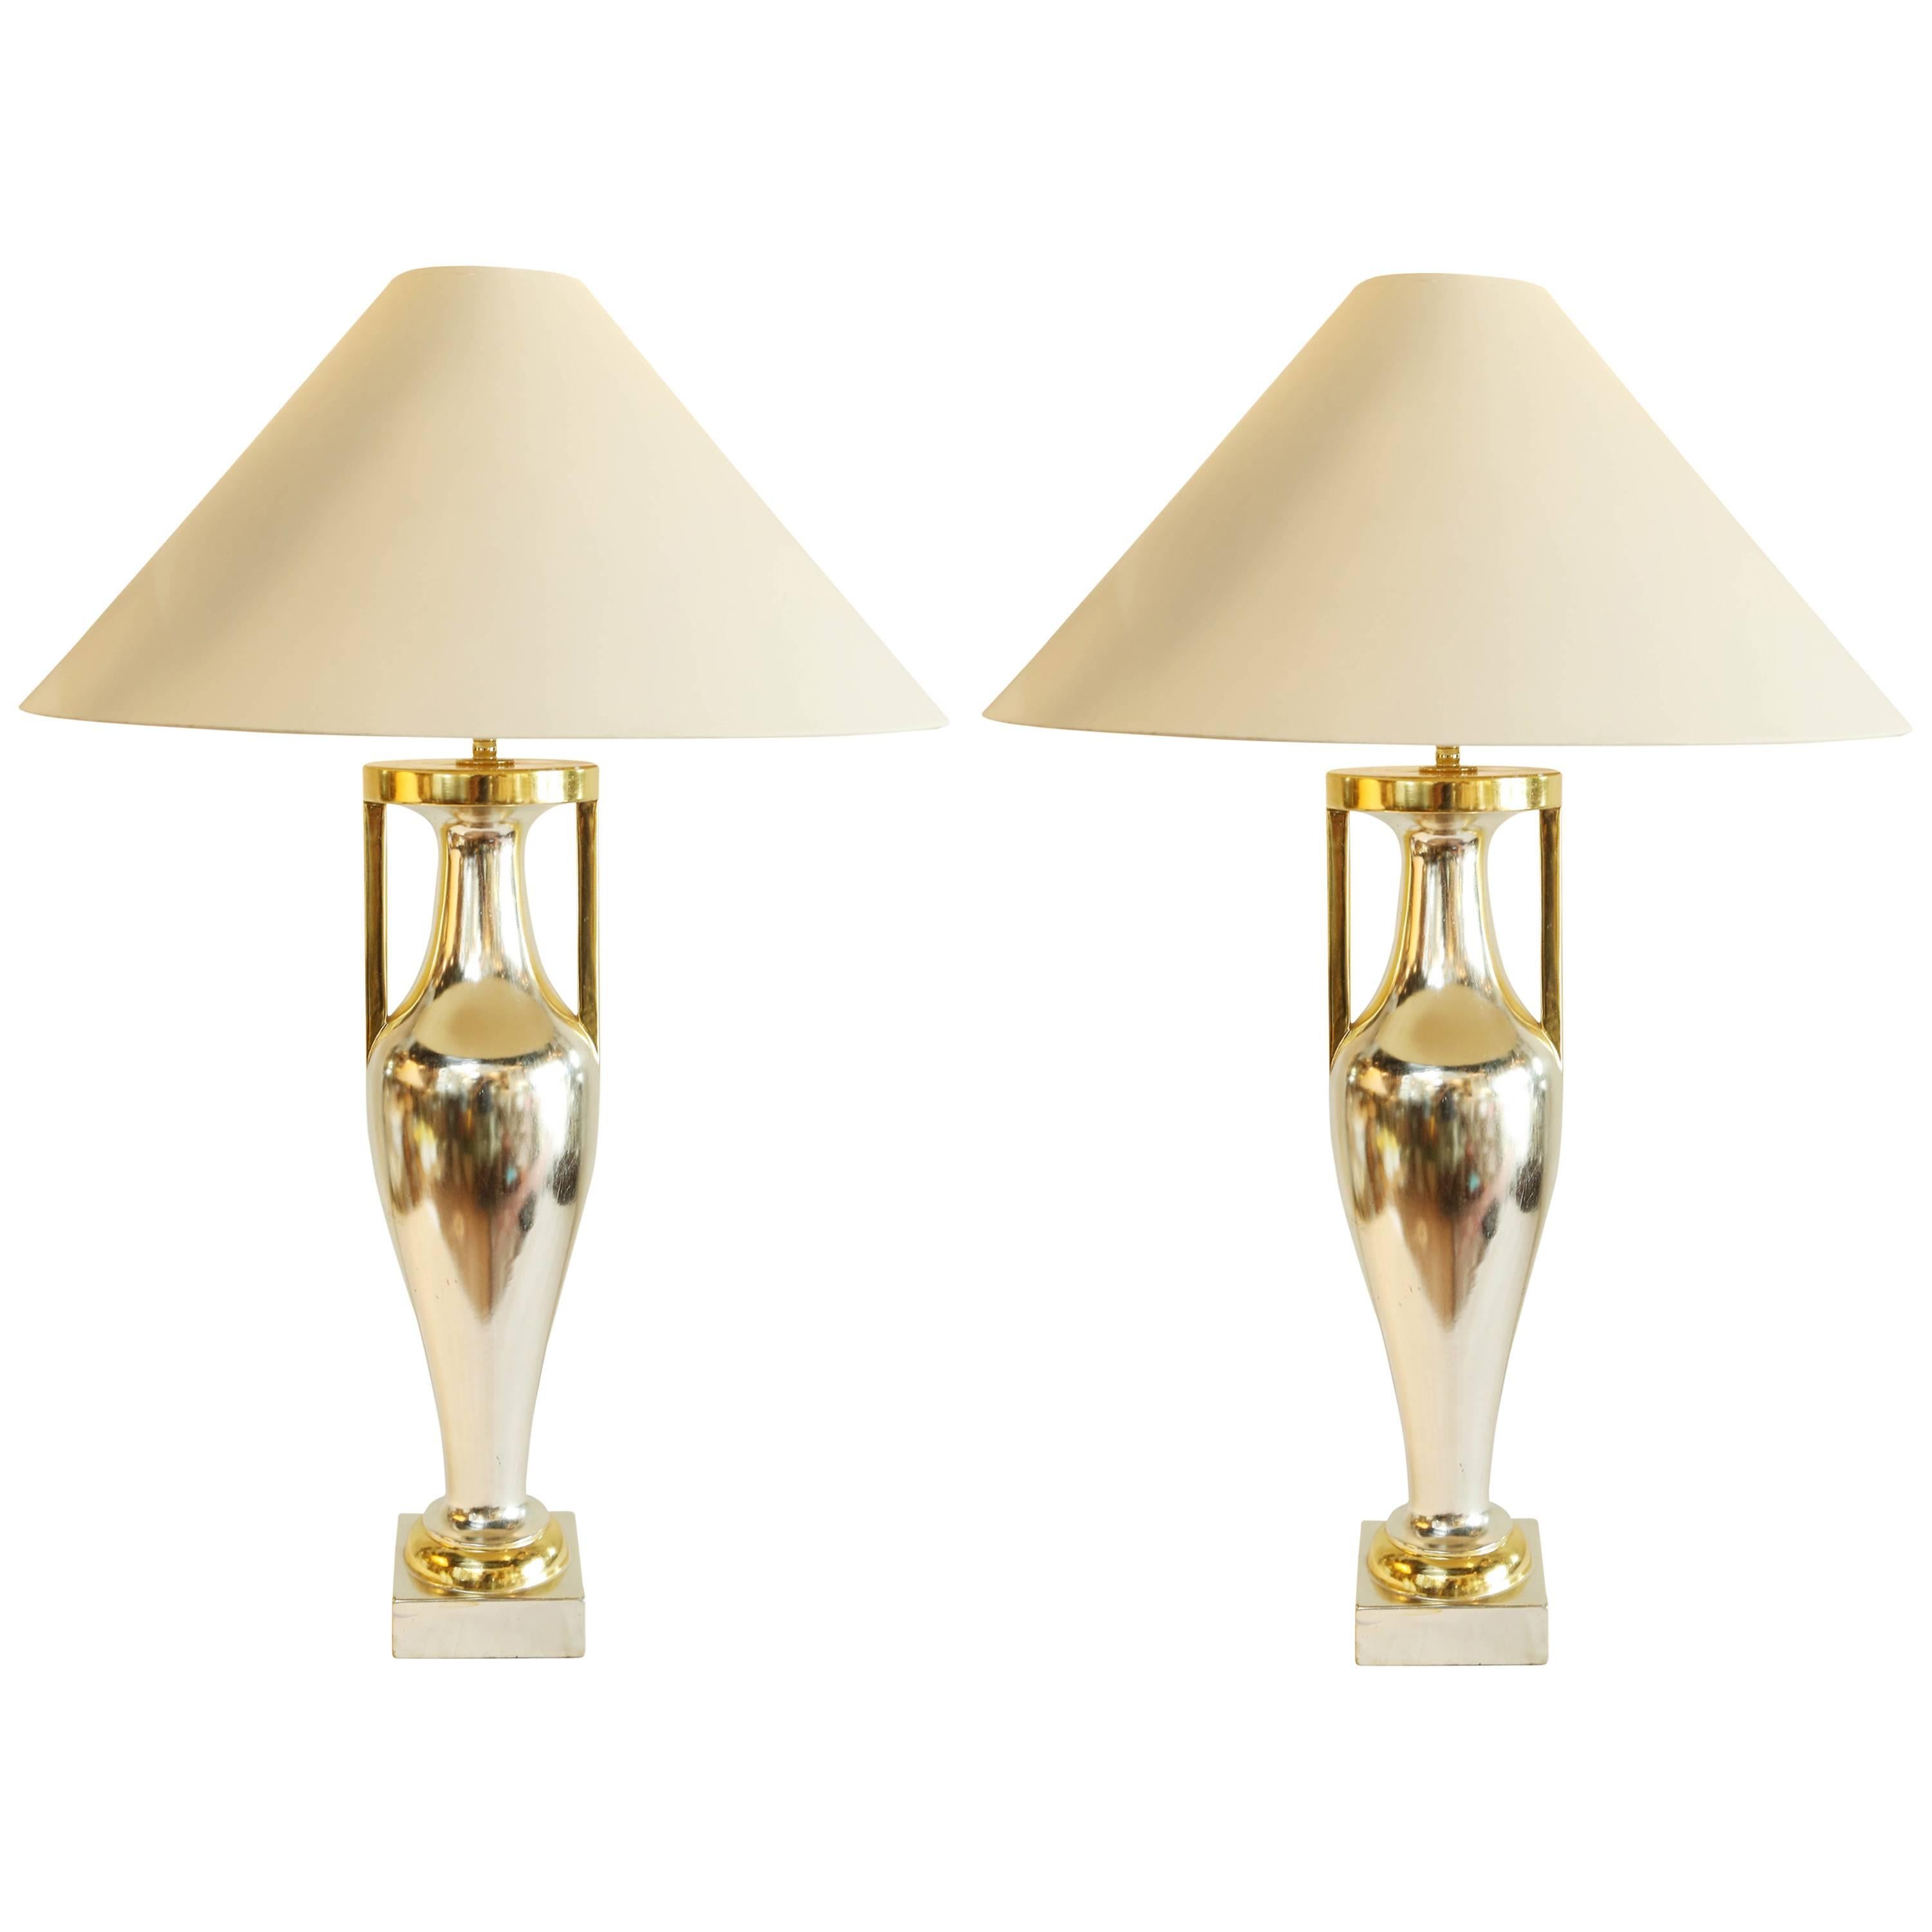 Pair of Mid-Century Modern Style Amphora Lamps by J. Robert Scott